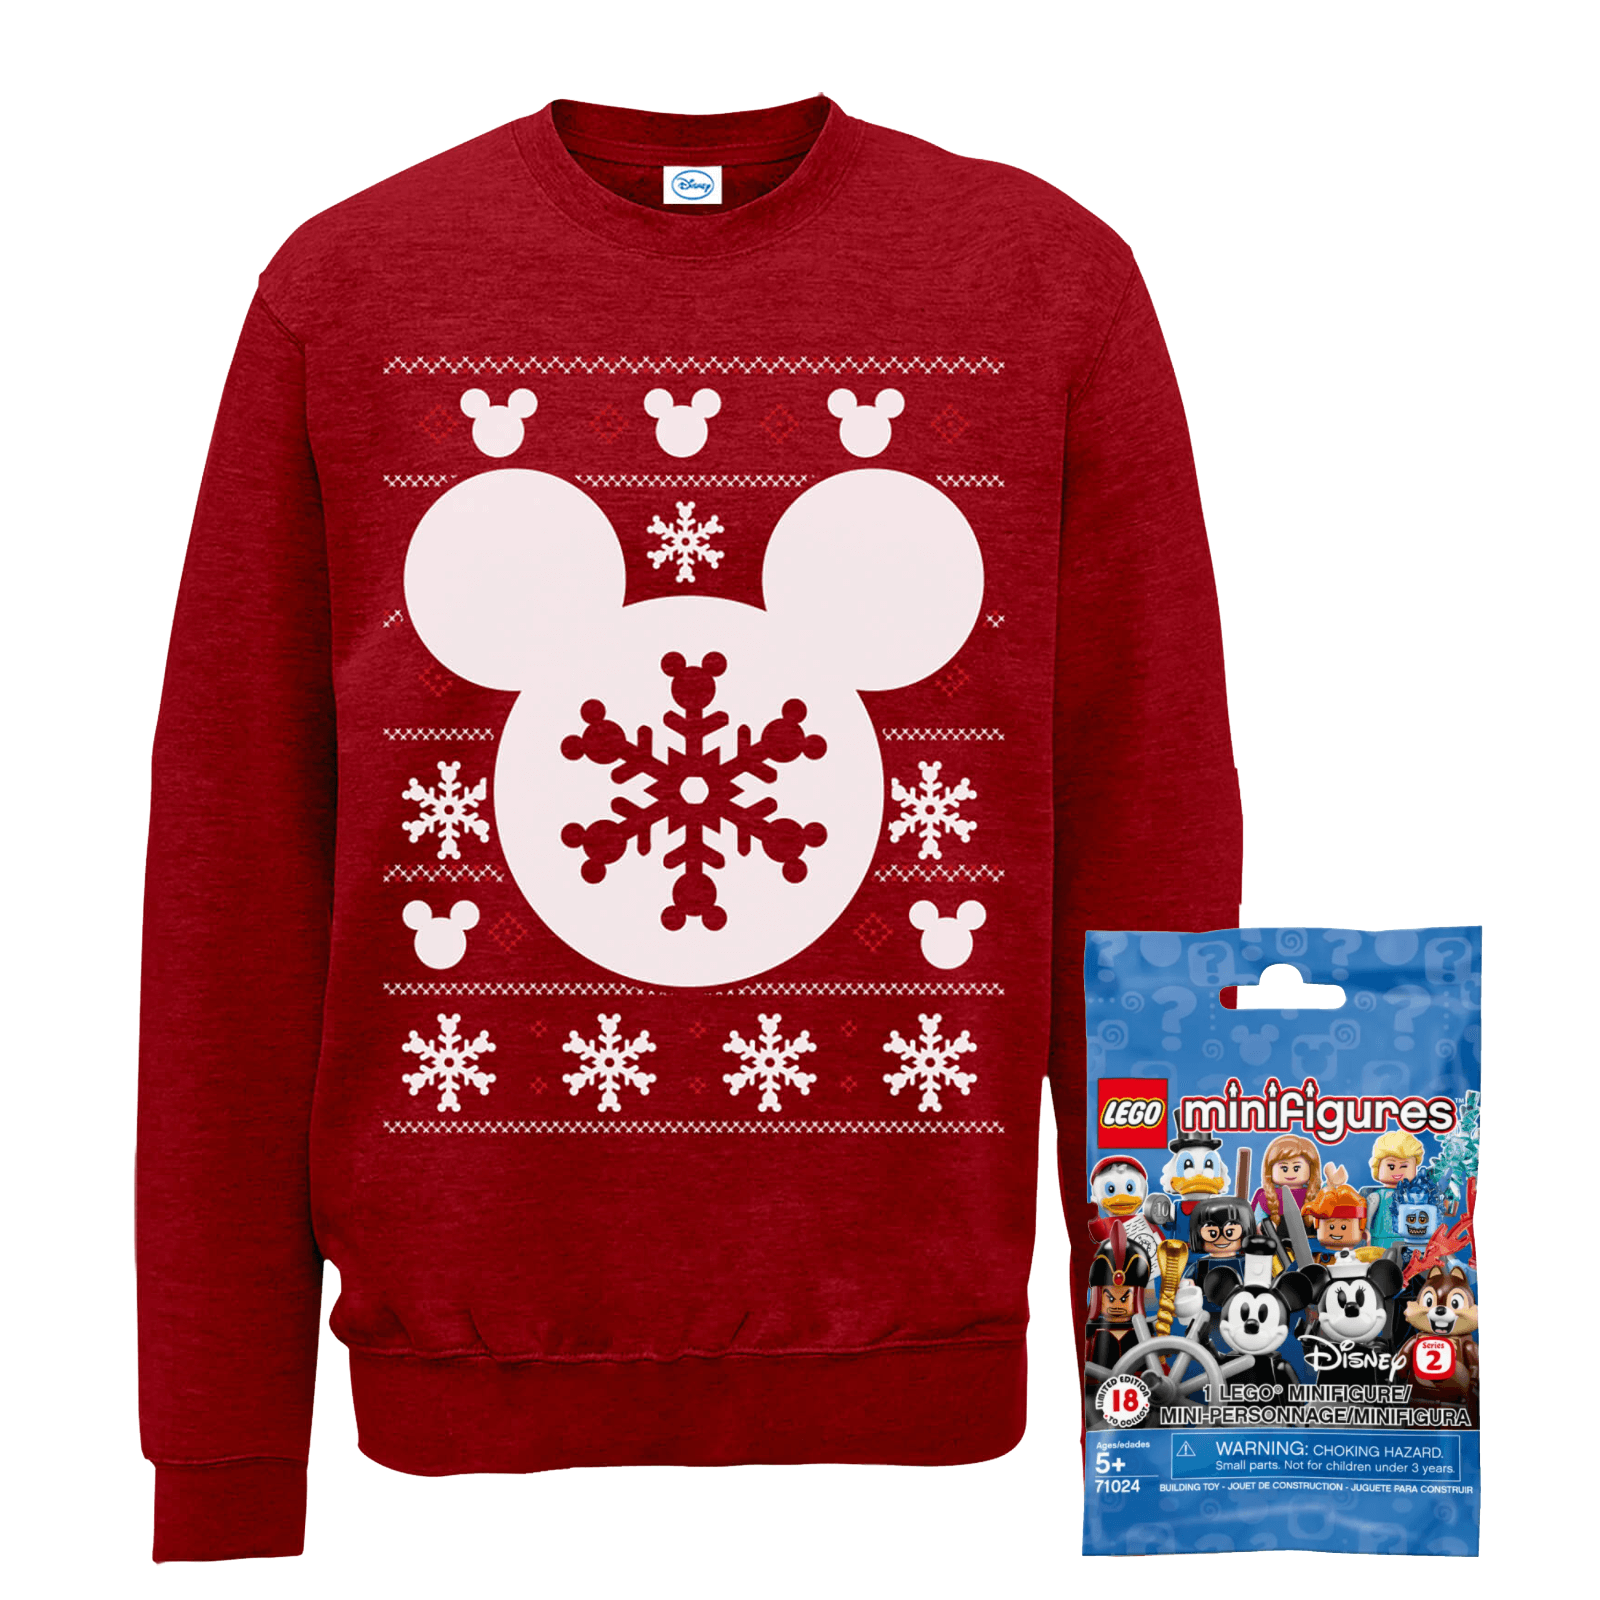 Disney Christmas Sweatshirt & Lego Minifigure Bundle - Kids' - 9-10 Years von Disney